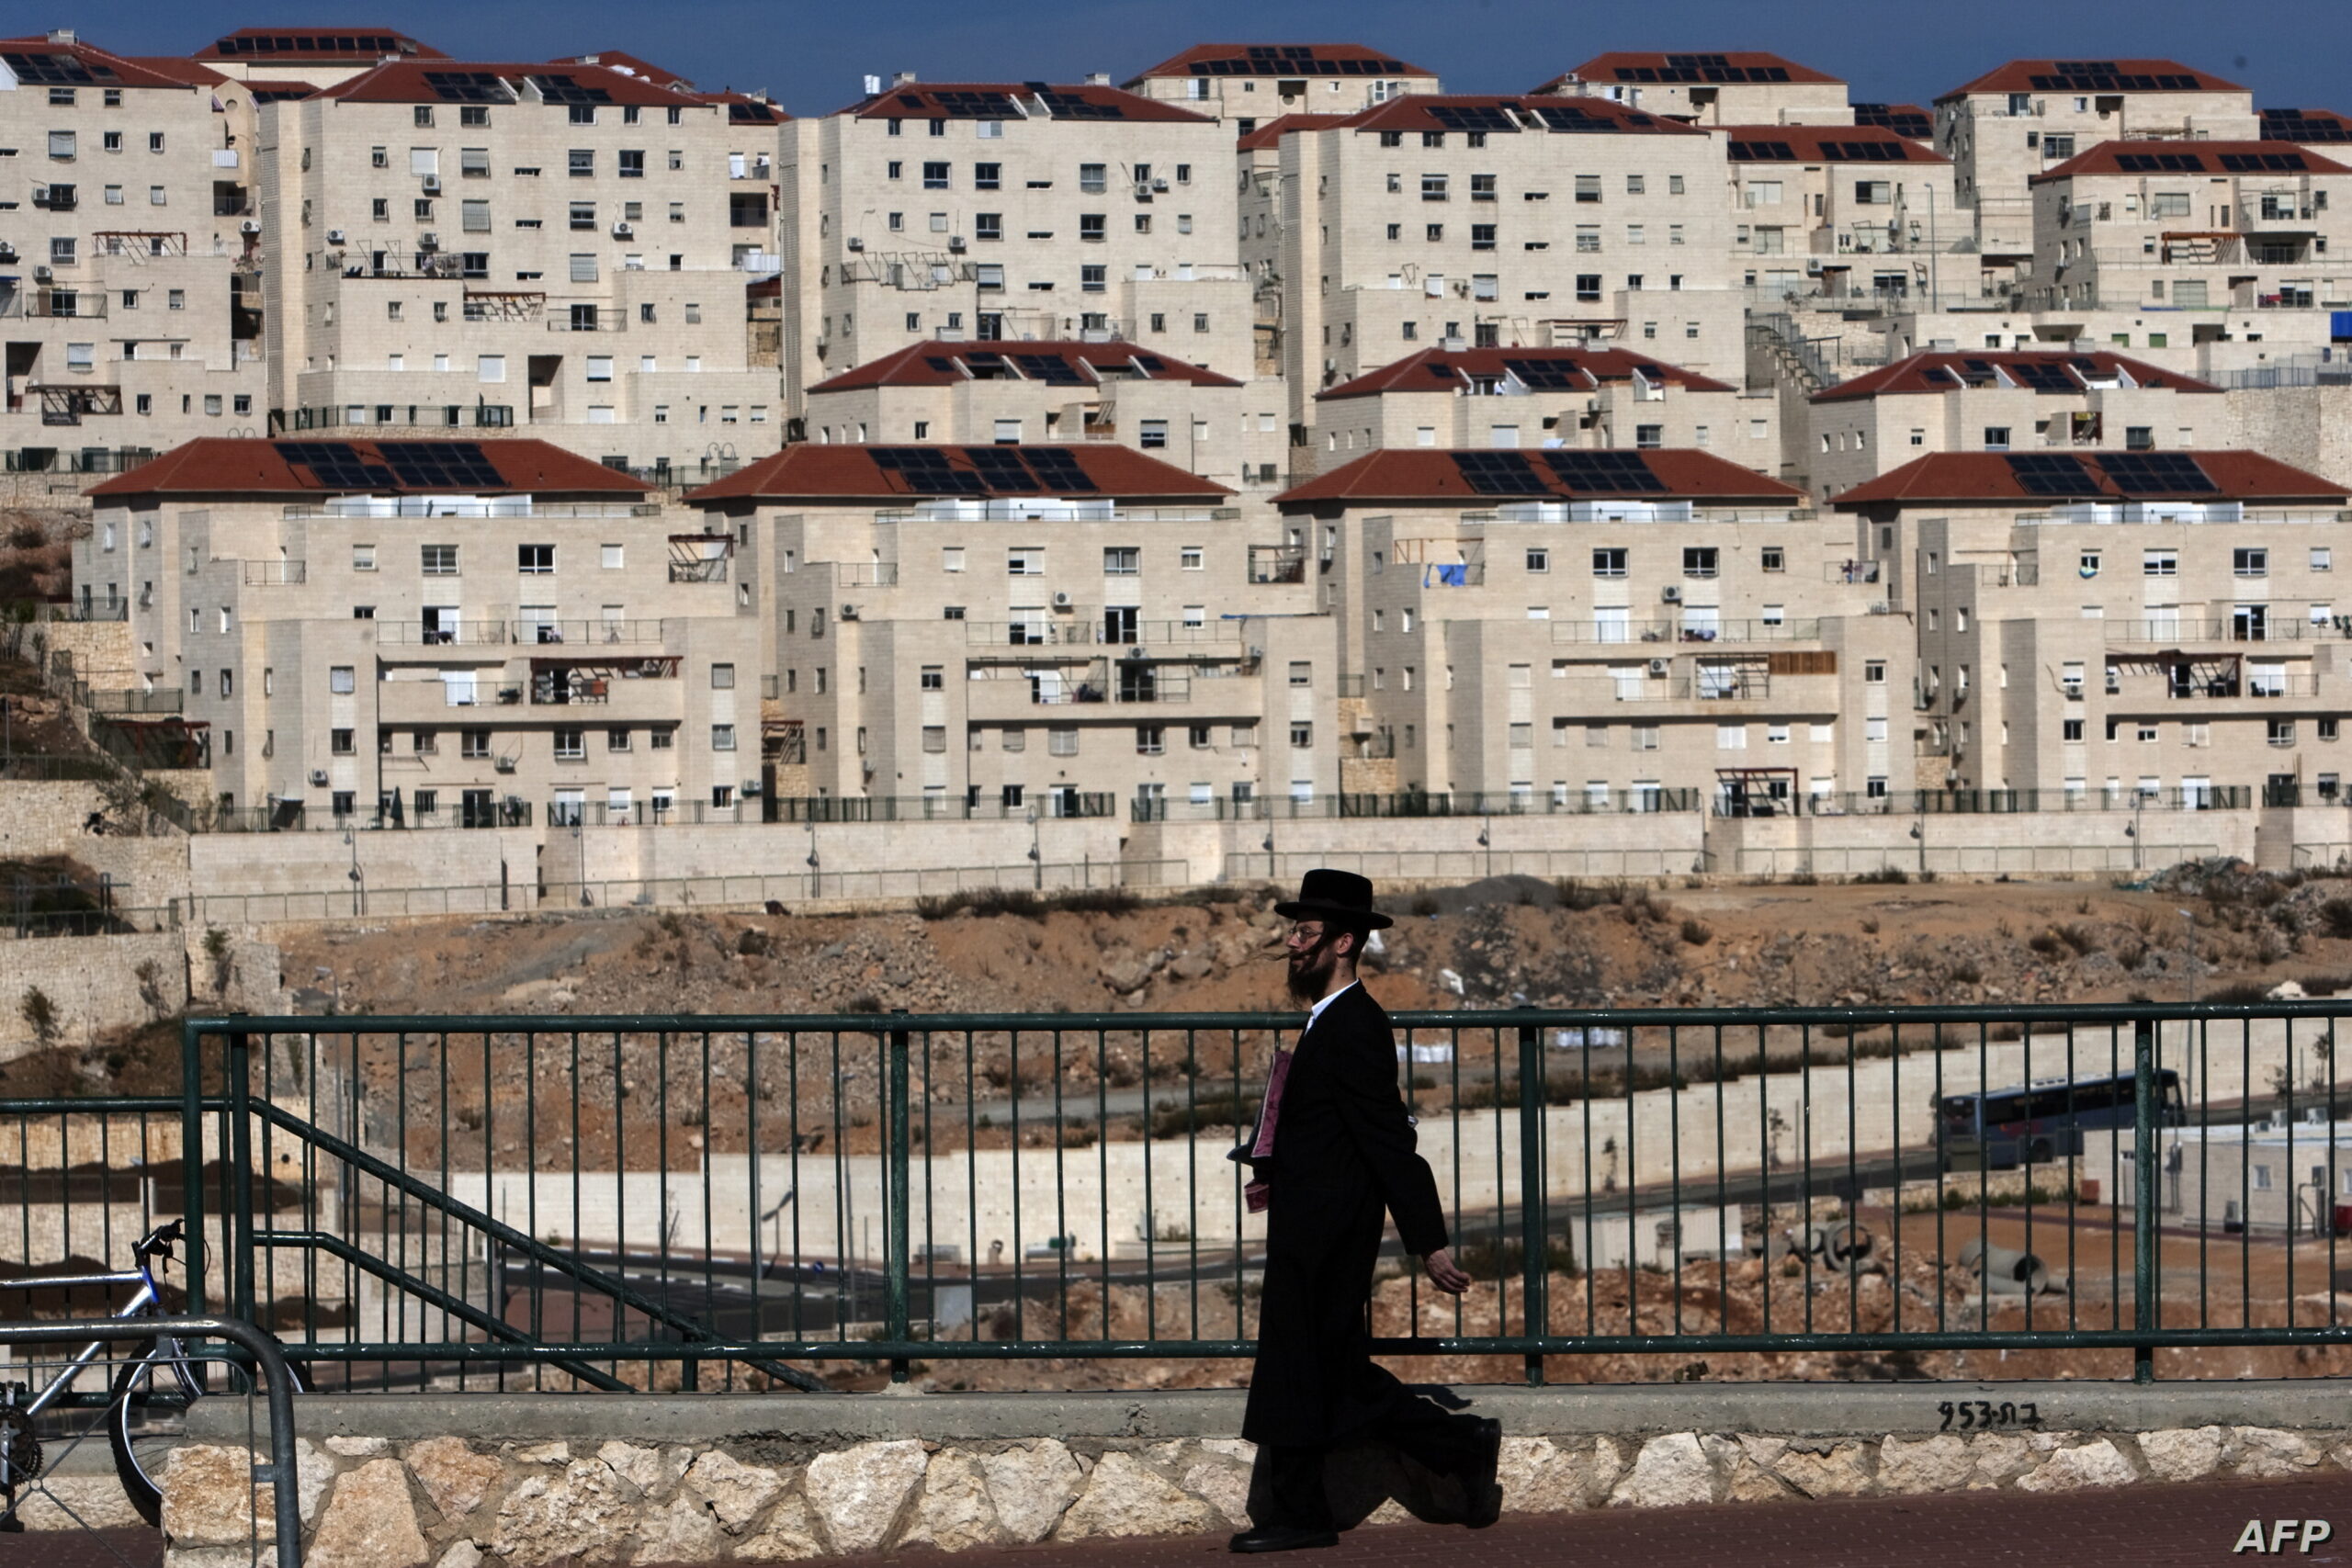 Israel’s settlers change West Bank landscape with hilltop outposts